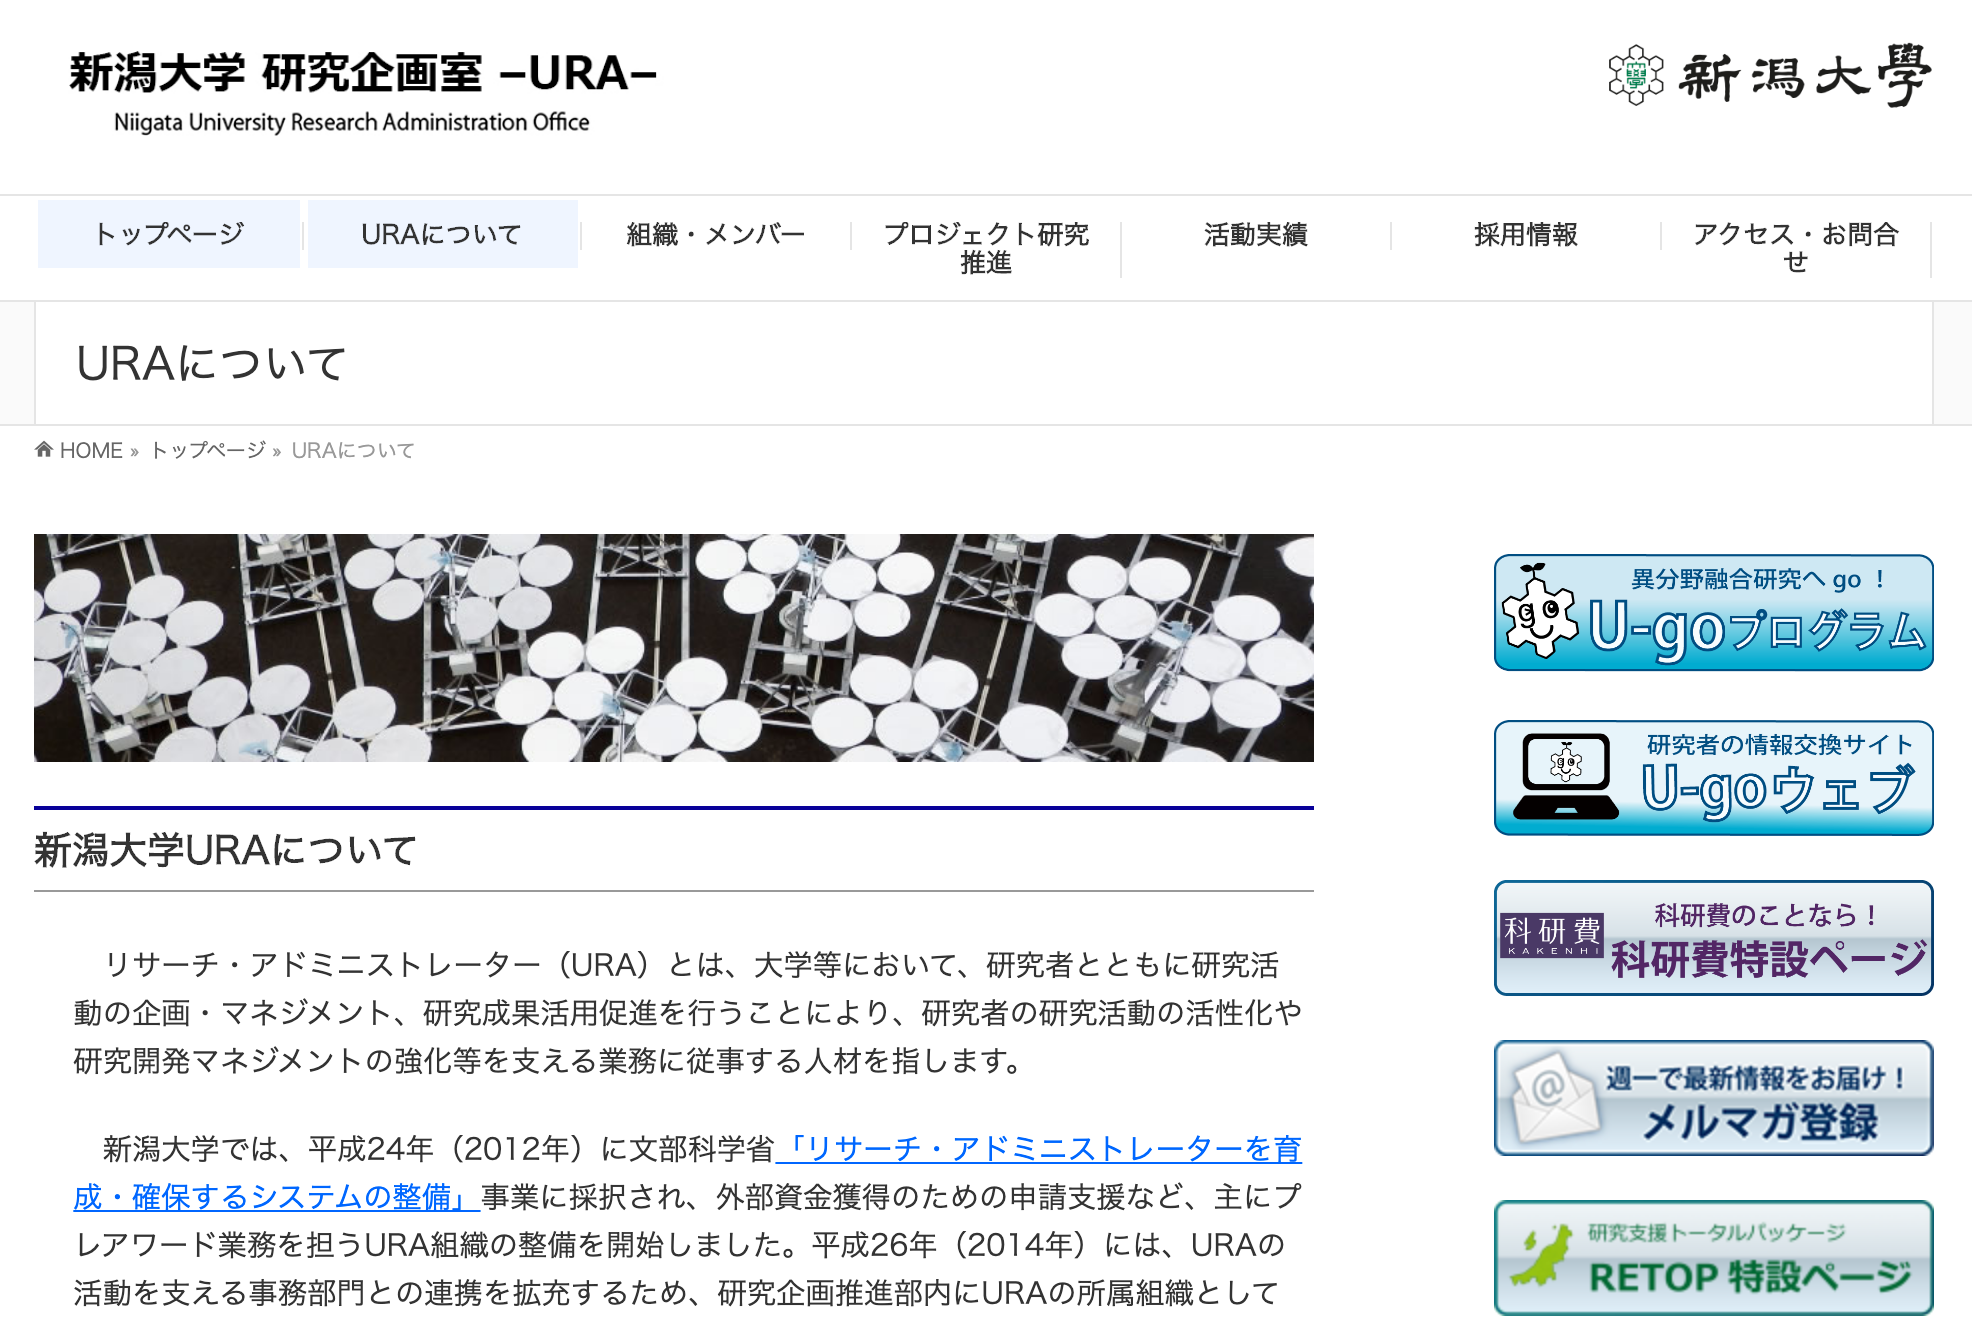 URA 新潟大学研究企画室 - www.ura.niigata-u.ac.jp